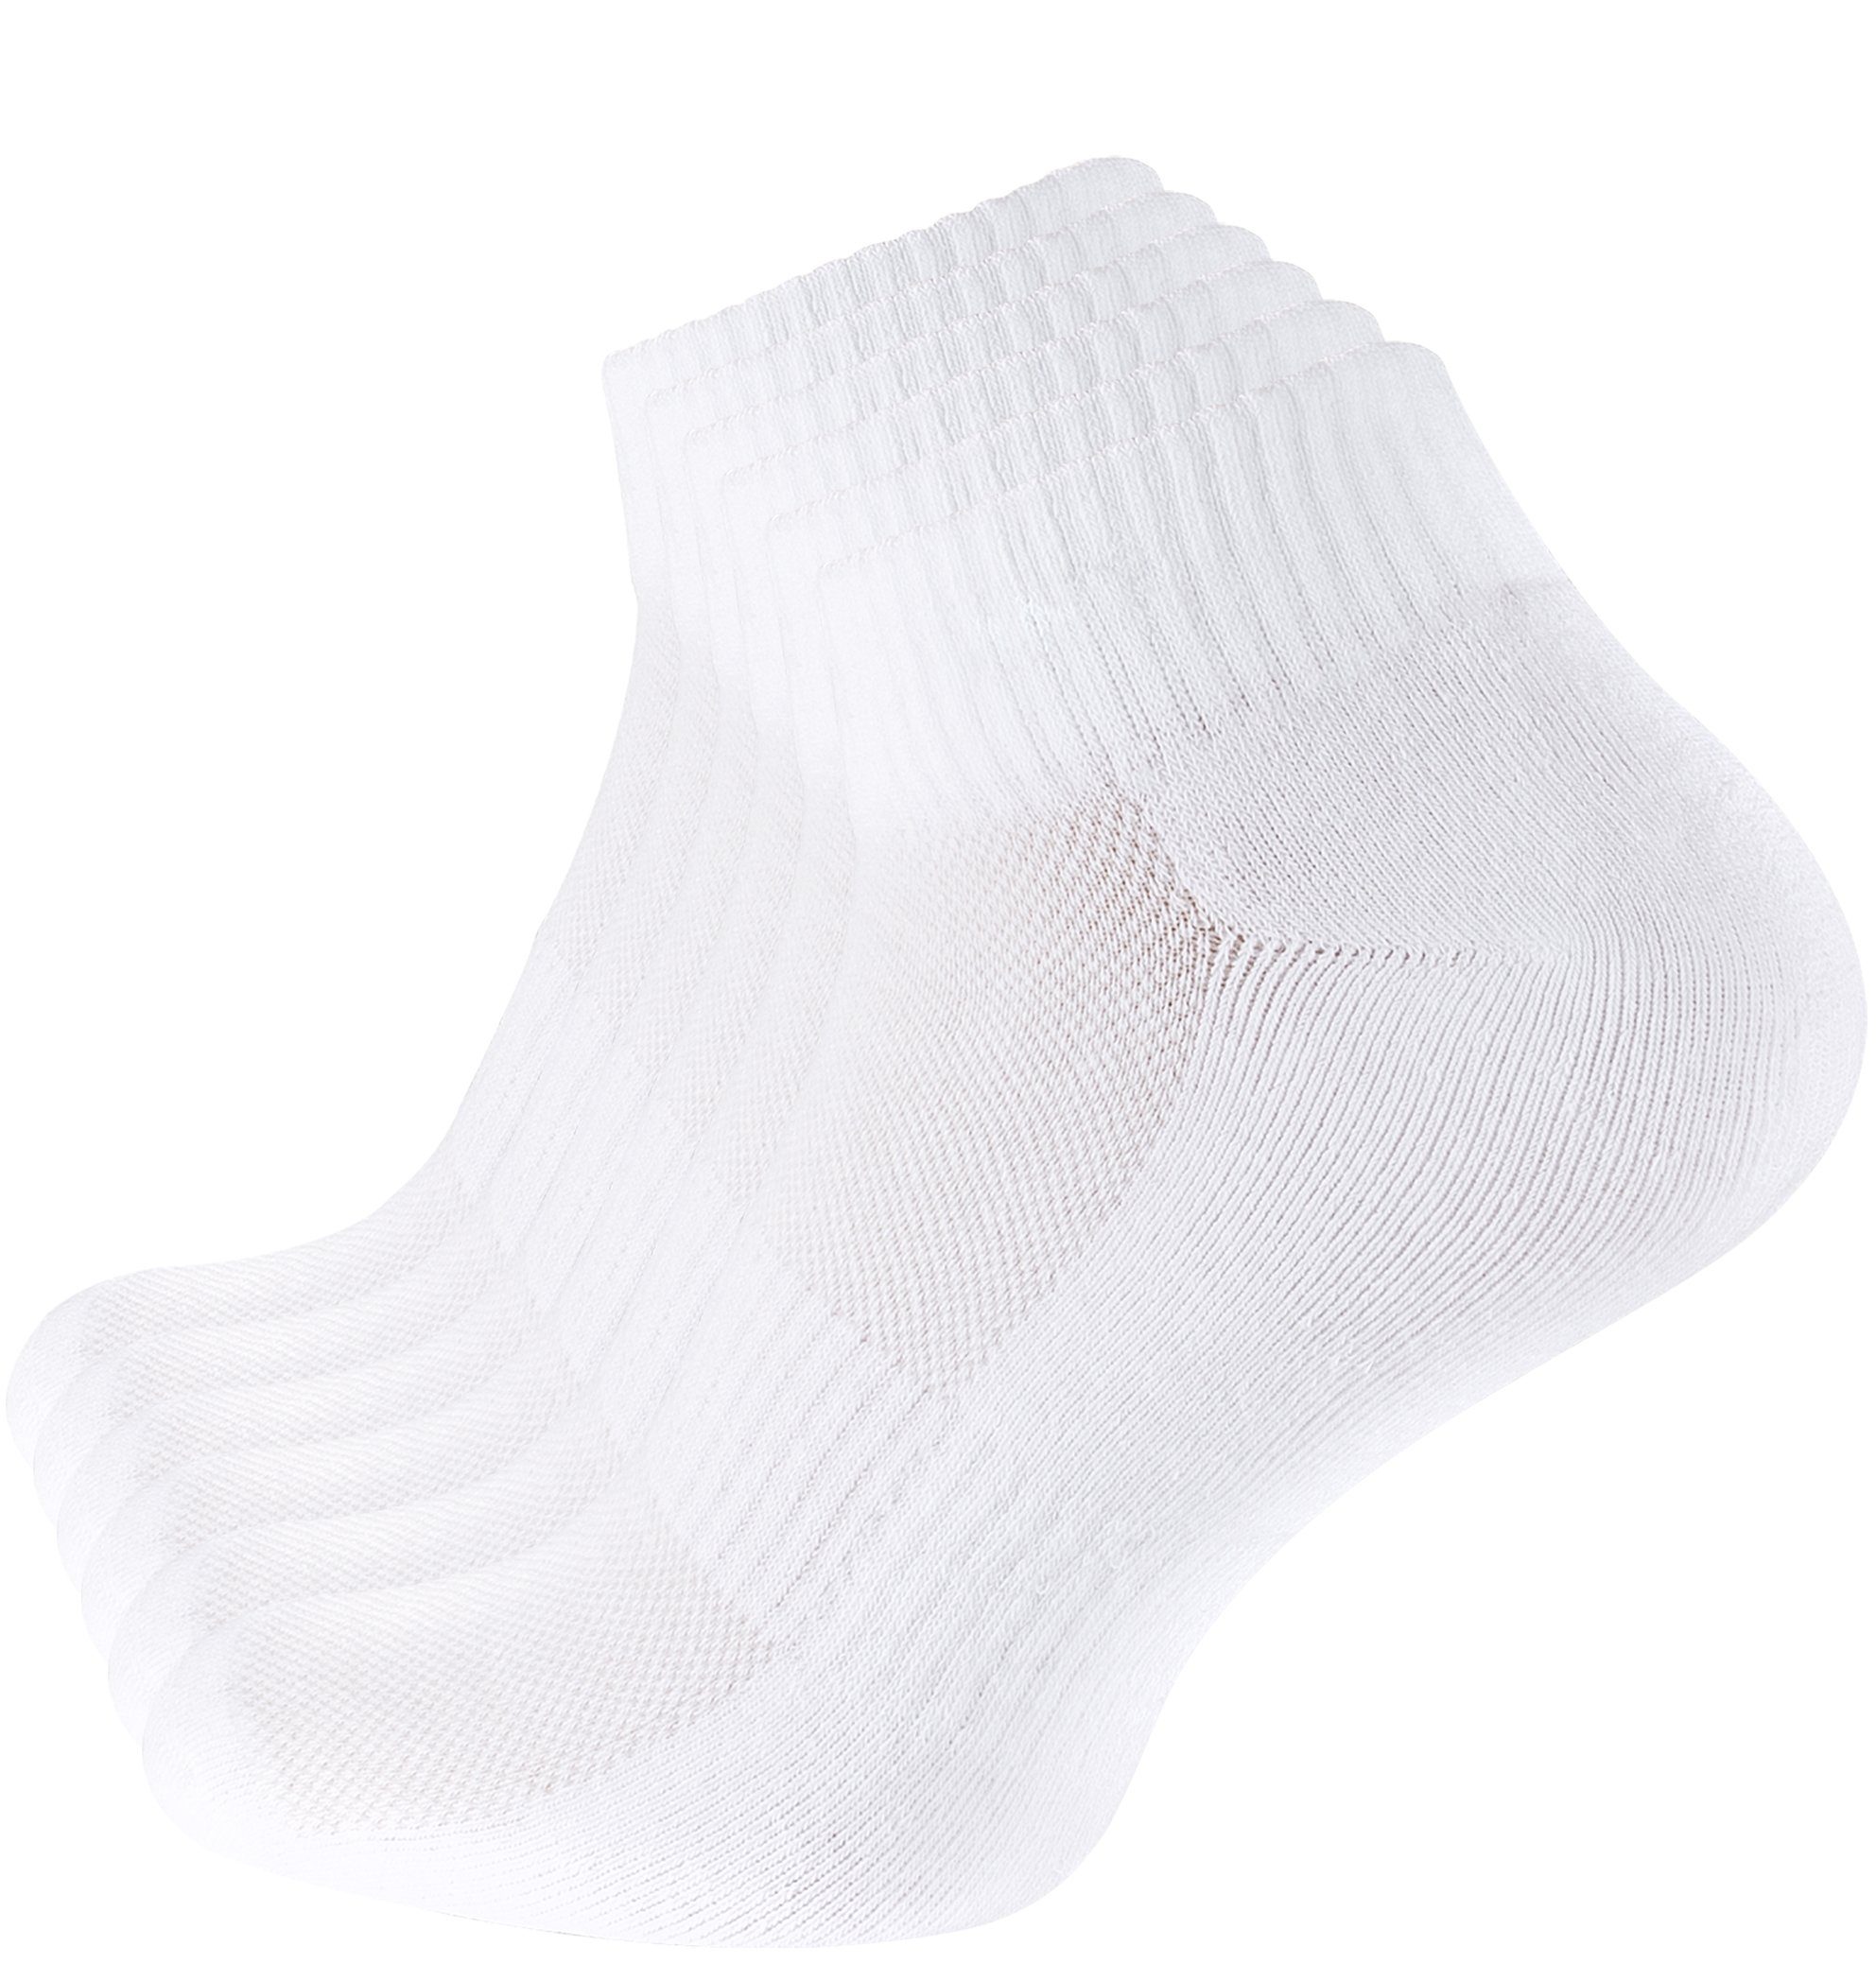 und Sportsocken Weiß 6 Paar mit Quarter Frotteesole Soul® Mesh-Strick Socken-Sportsocken Stark